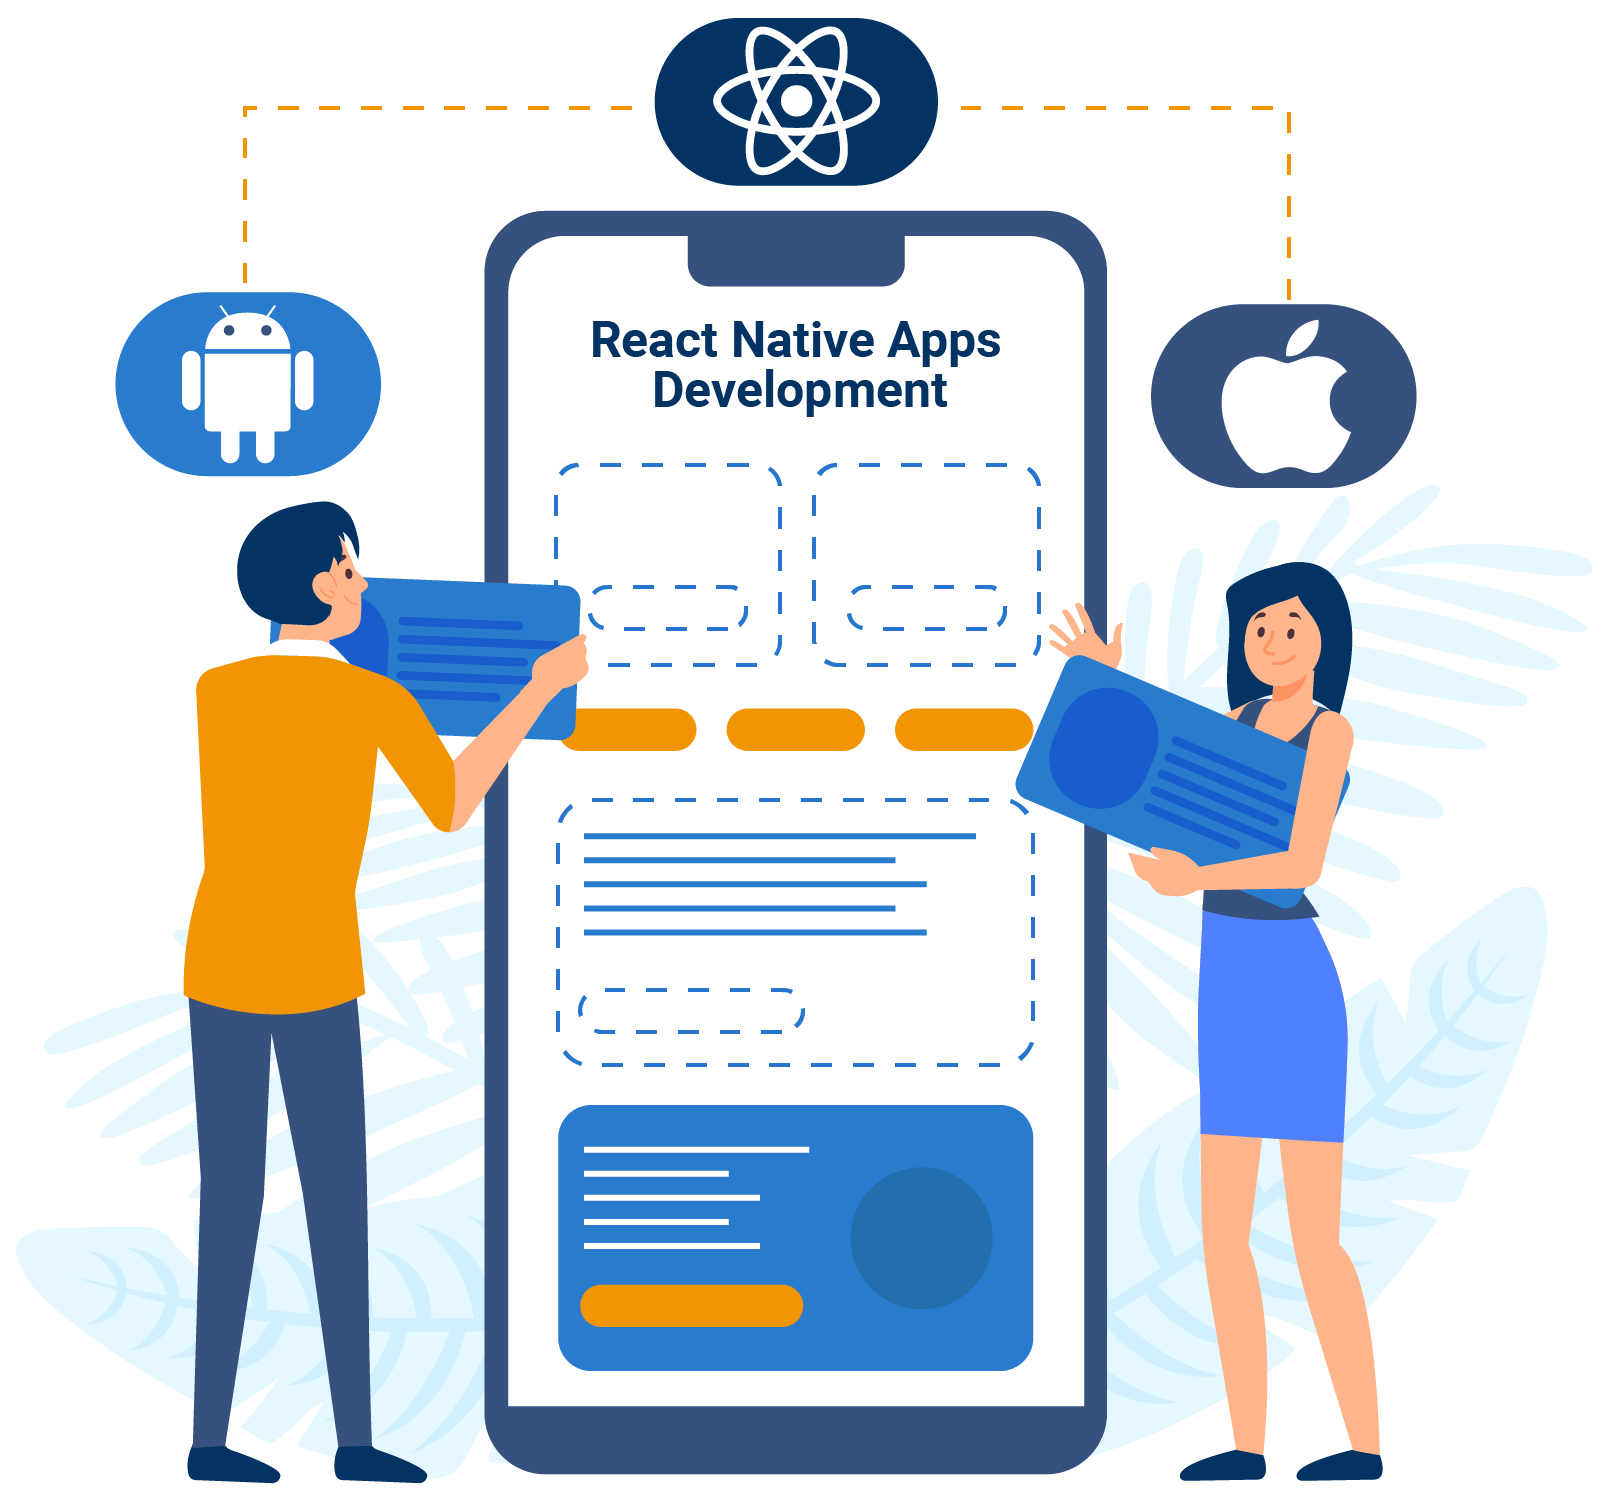 React Native Apps Development